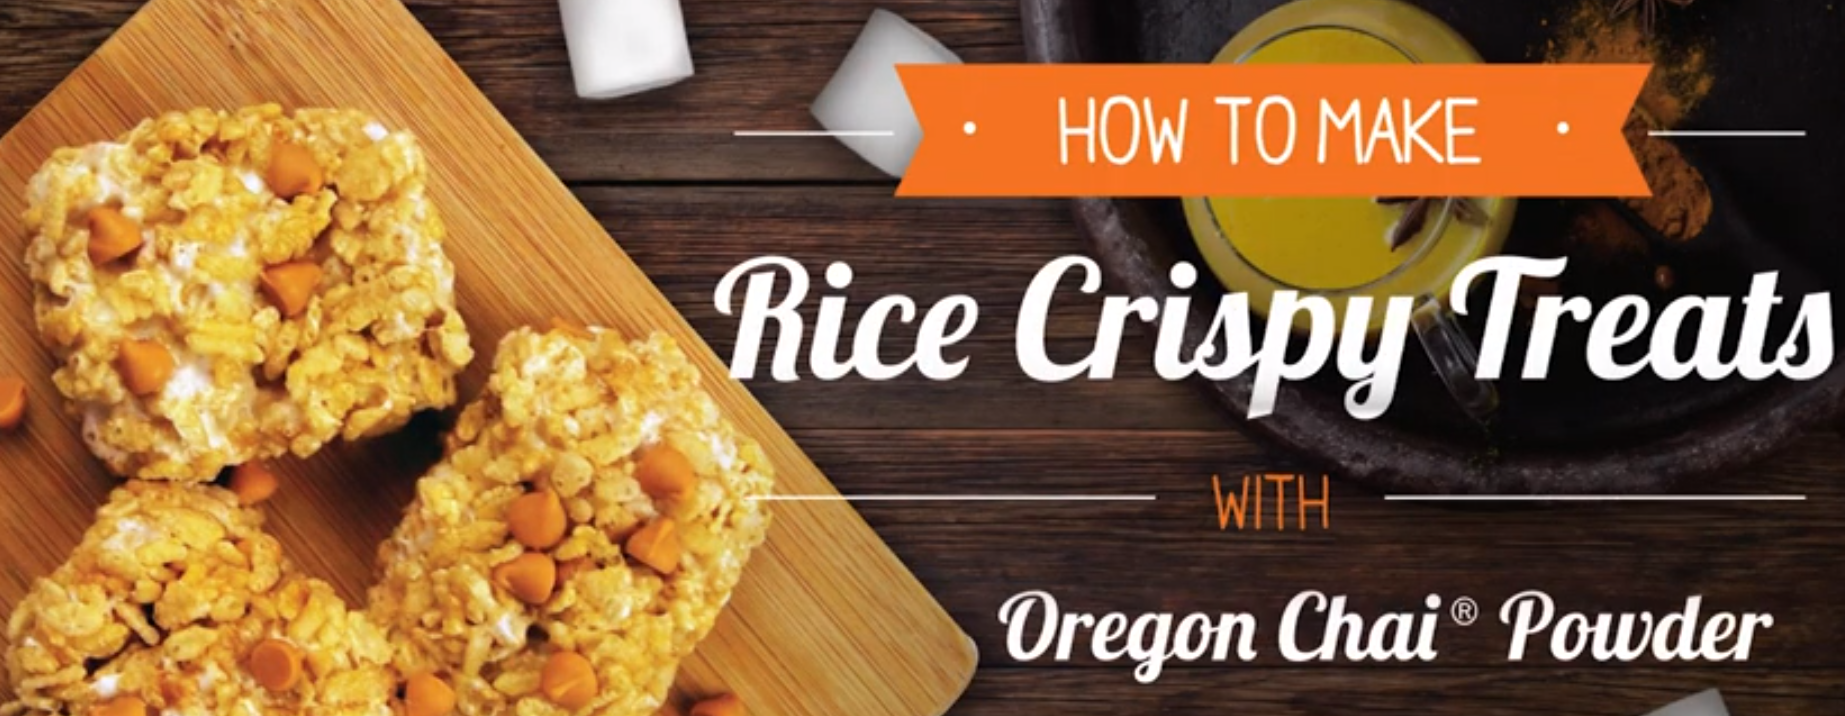 How to Make Rice Crispy Treats ... with Oregon Chai!